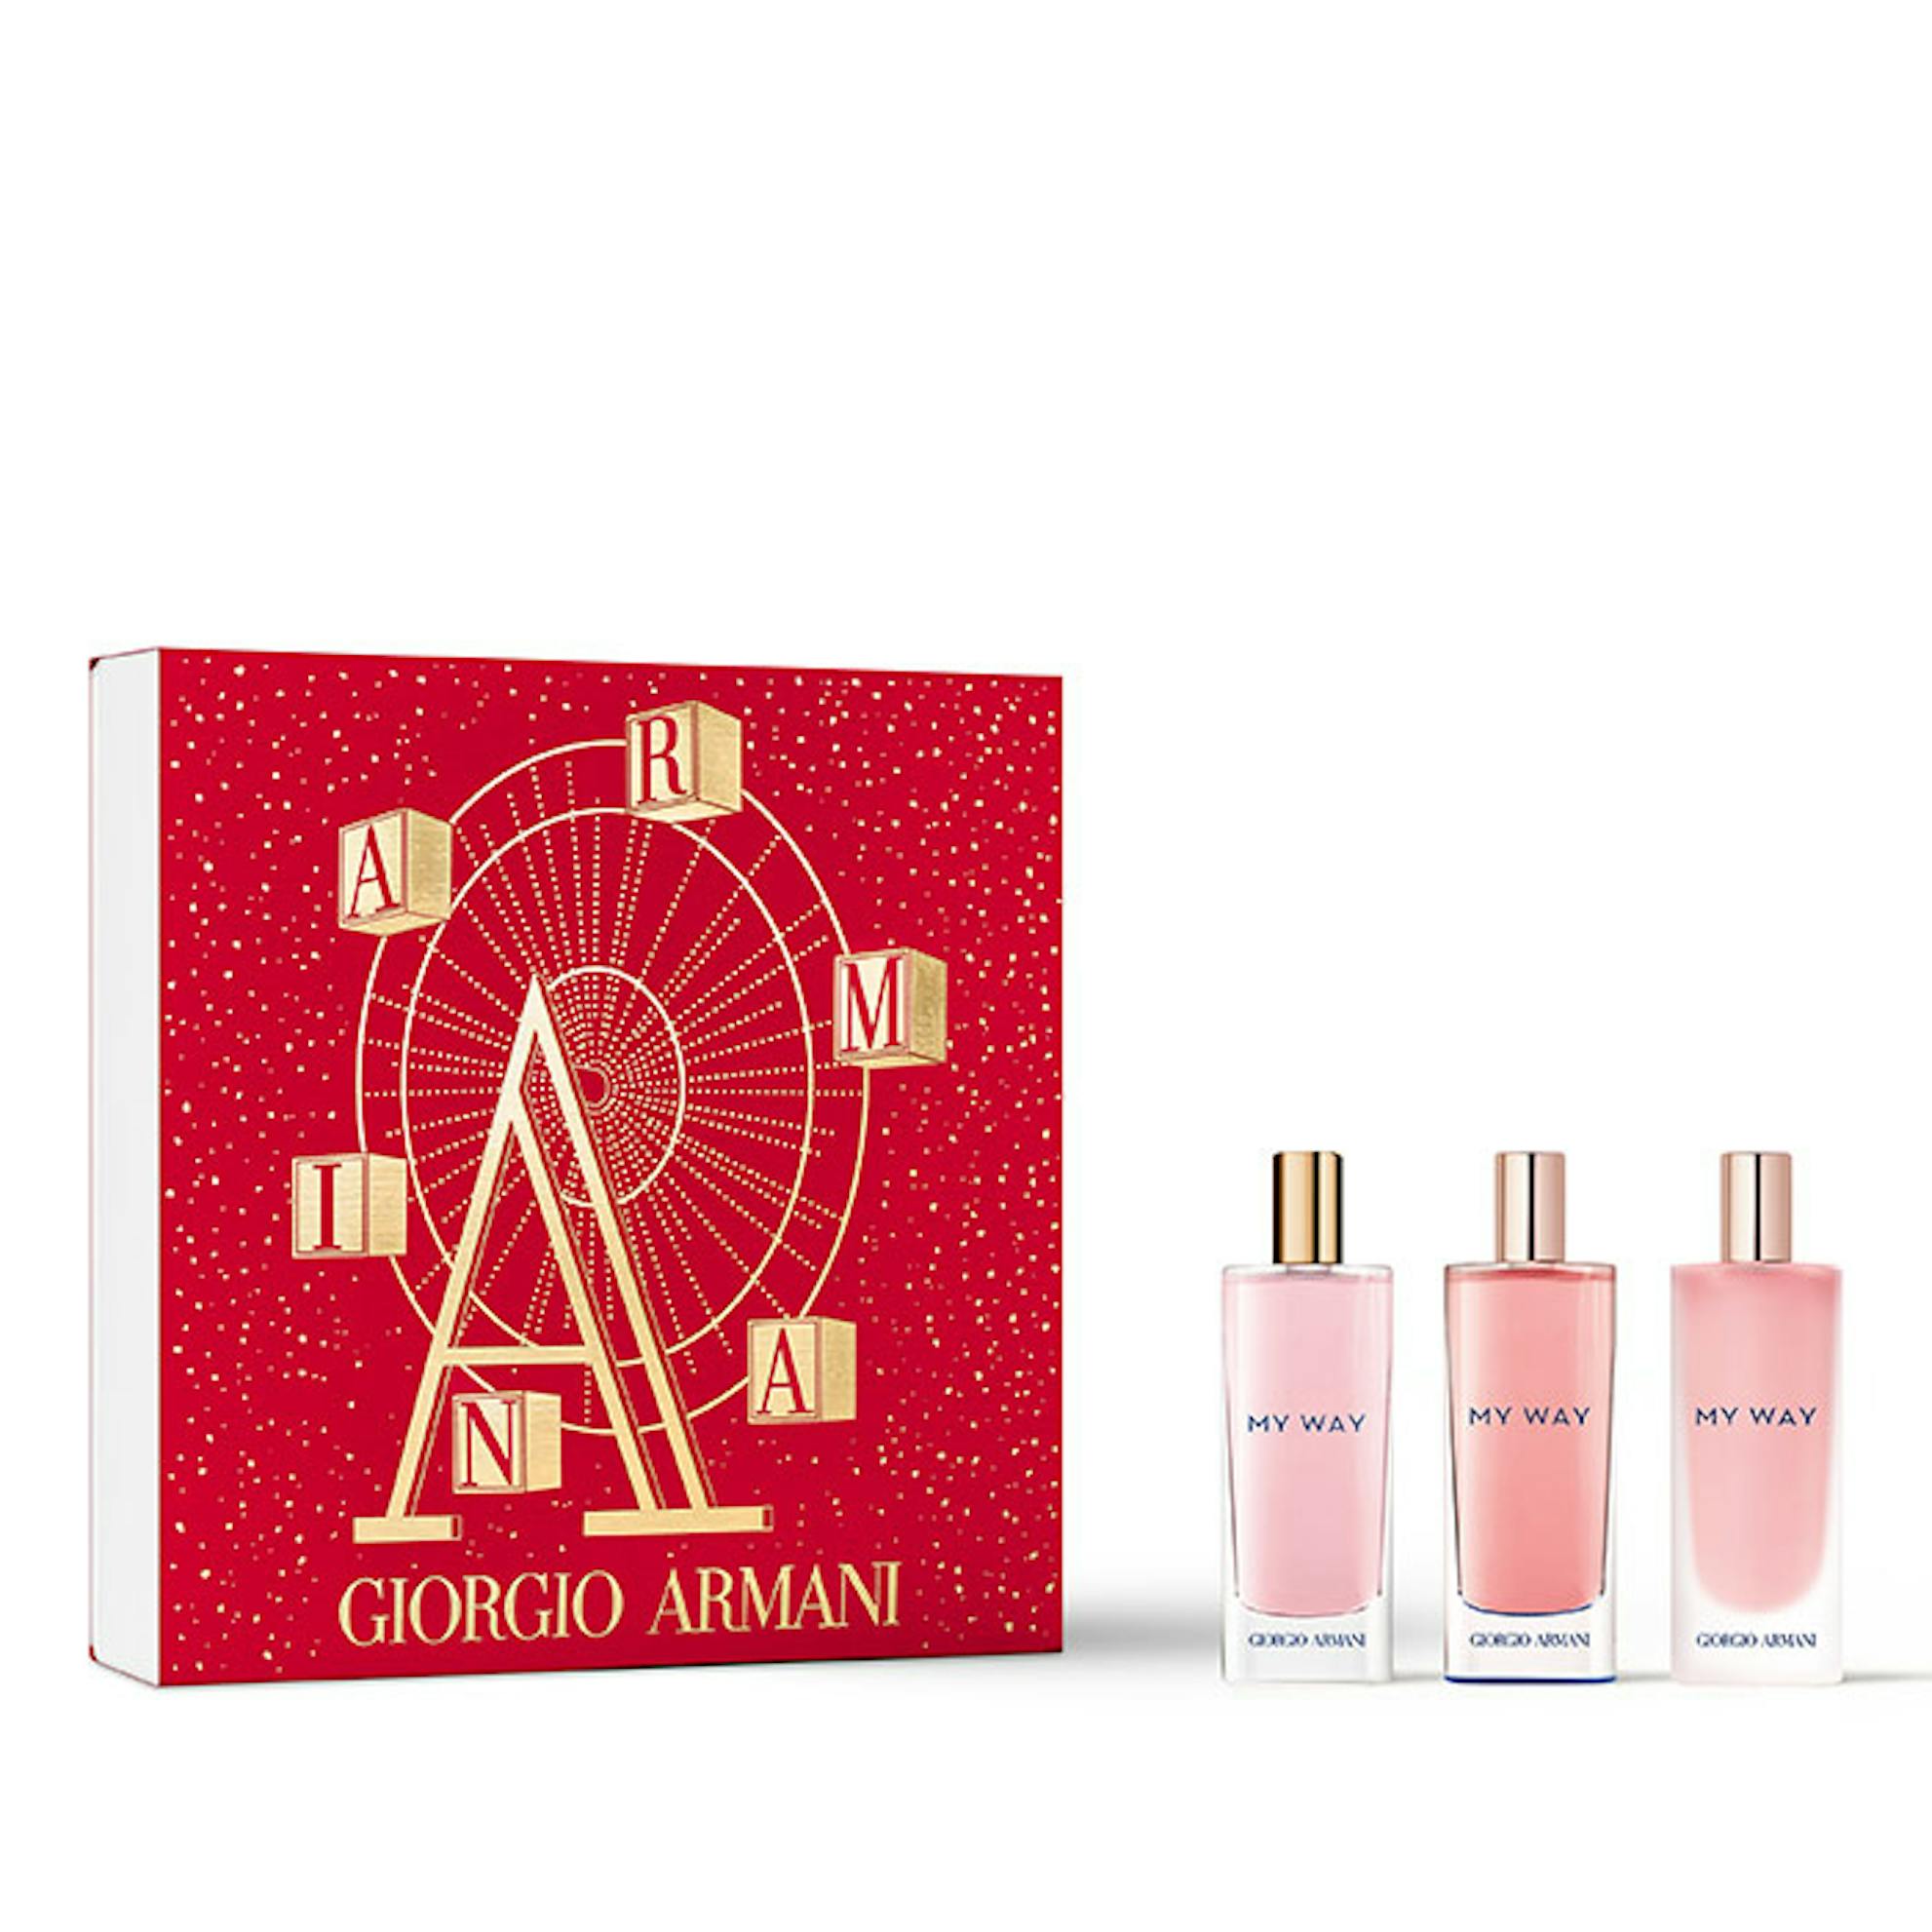 Armani My Way Eau De Parfum 15ml Christmas Gift Set | The Fragrance Shop